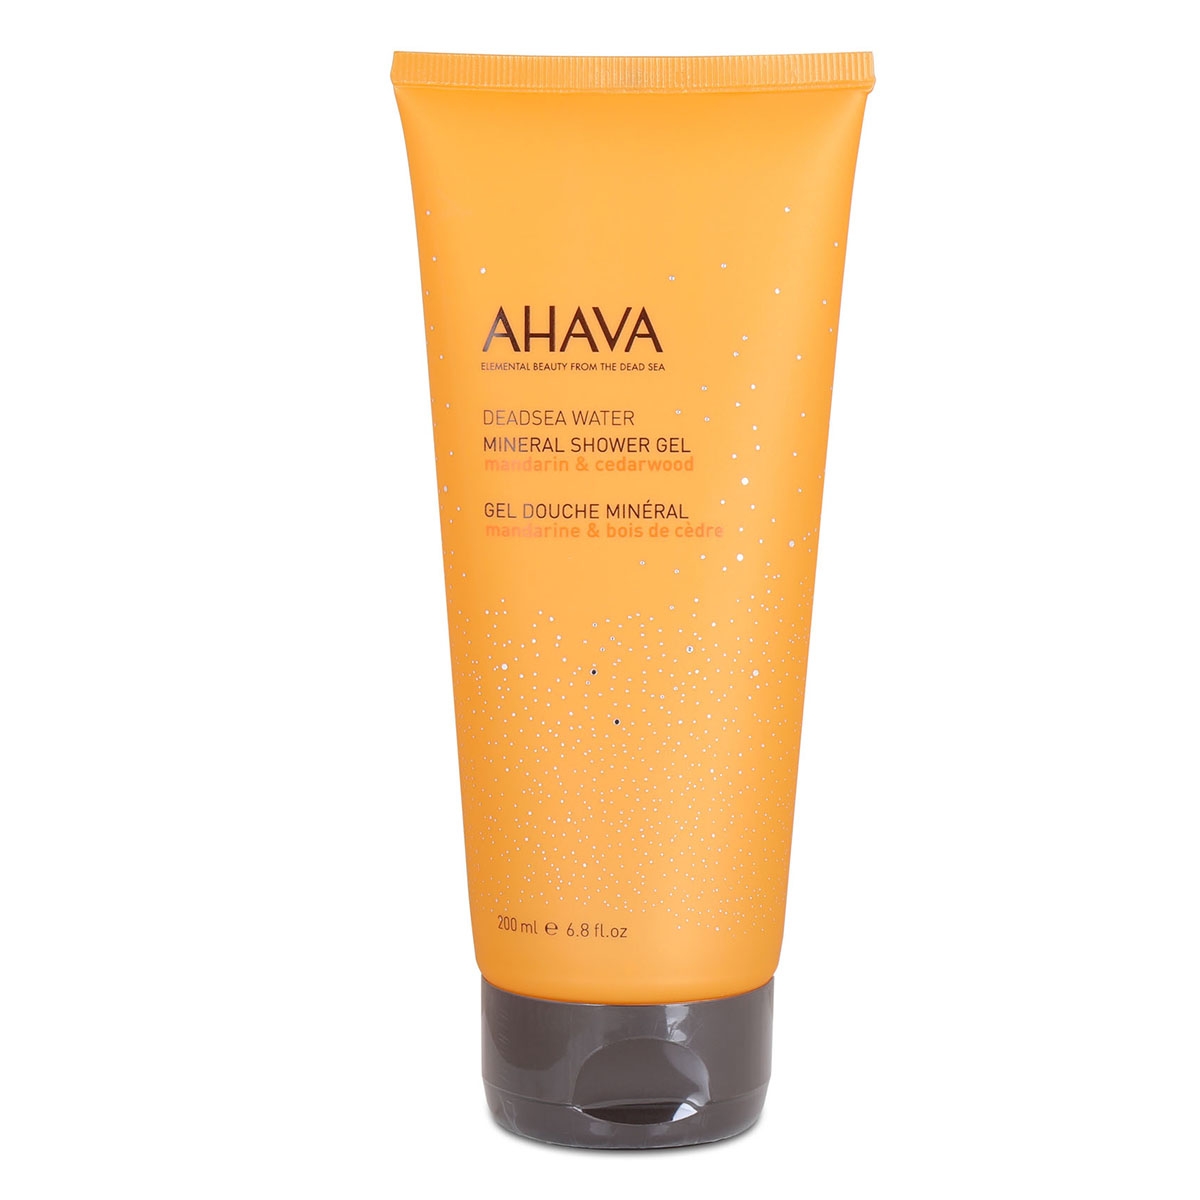 AHAVA Dead Sea Water Mineral Shower Gel – Mandarin & Cedarwood - 1